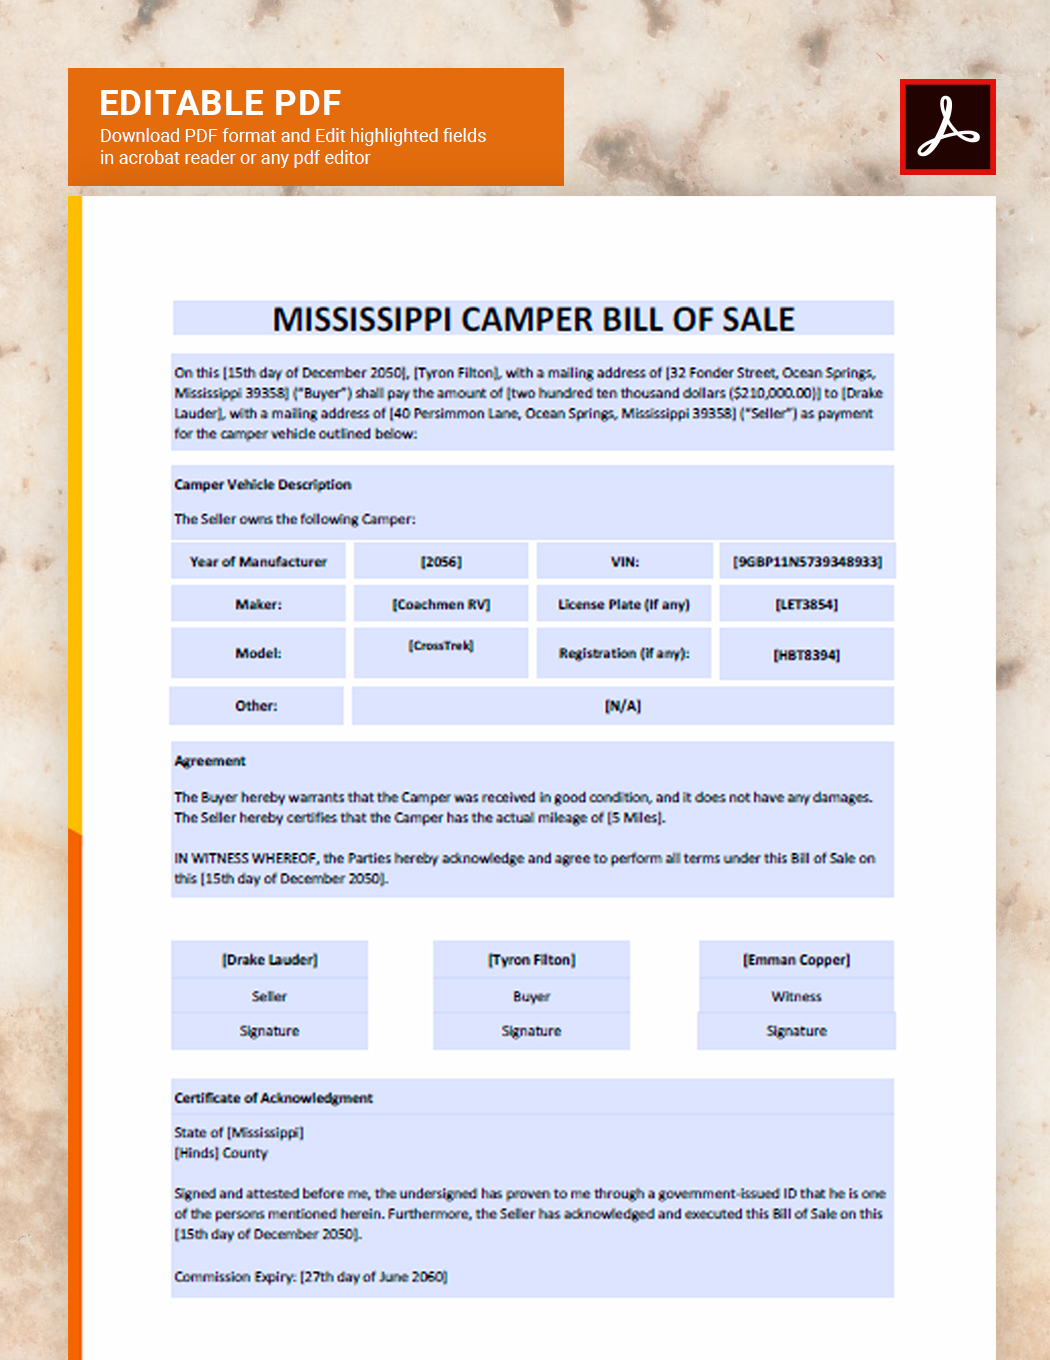 Mississippi Camper Bill of Sale Template